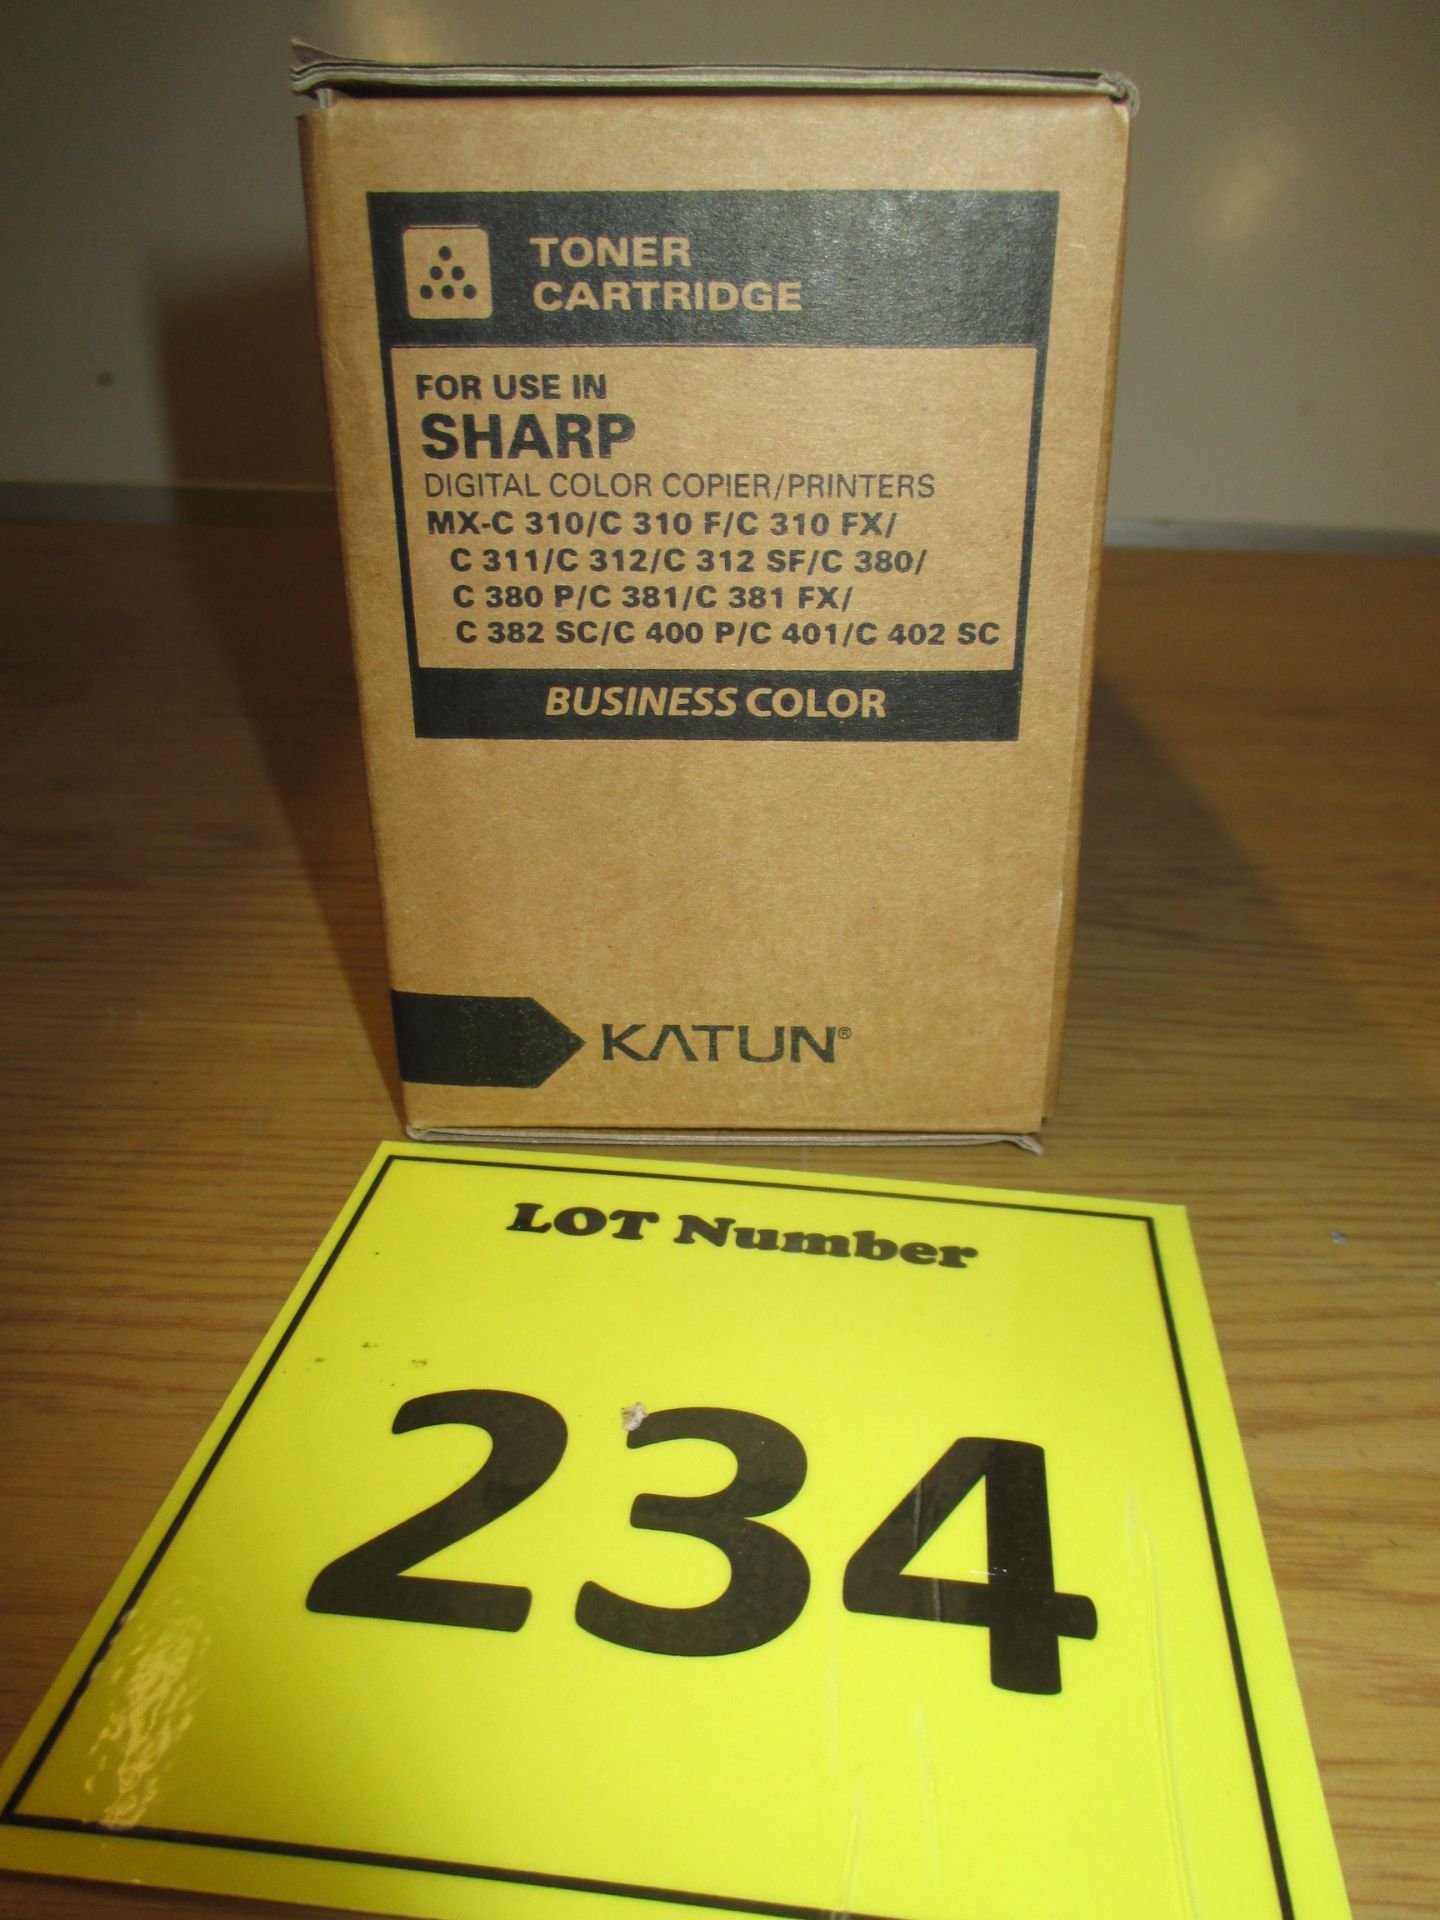 KATUN BLACK TONER CARTRIDGE FOR USE IN SHARP DIGITAL COPIER / PRINTERS. SEE PHOTO FOR MODELS